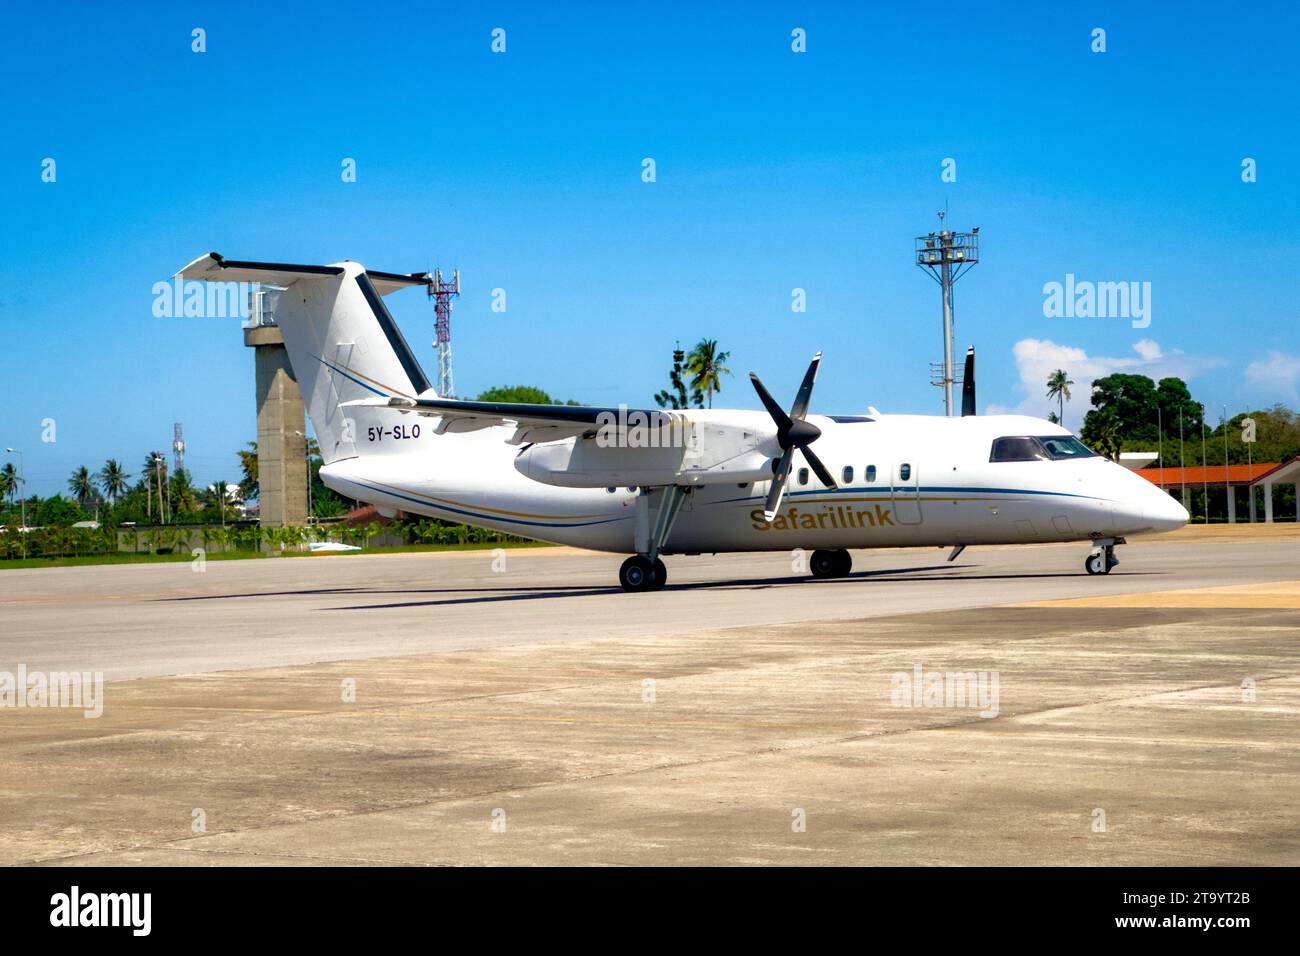 A safarilink Aviation aeroplane in Mombasa International Airport in Kenya Stock Photo